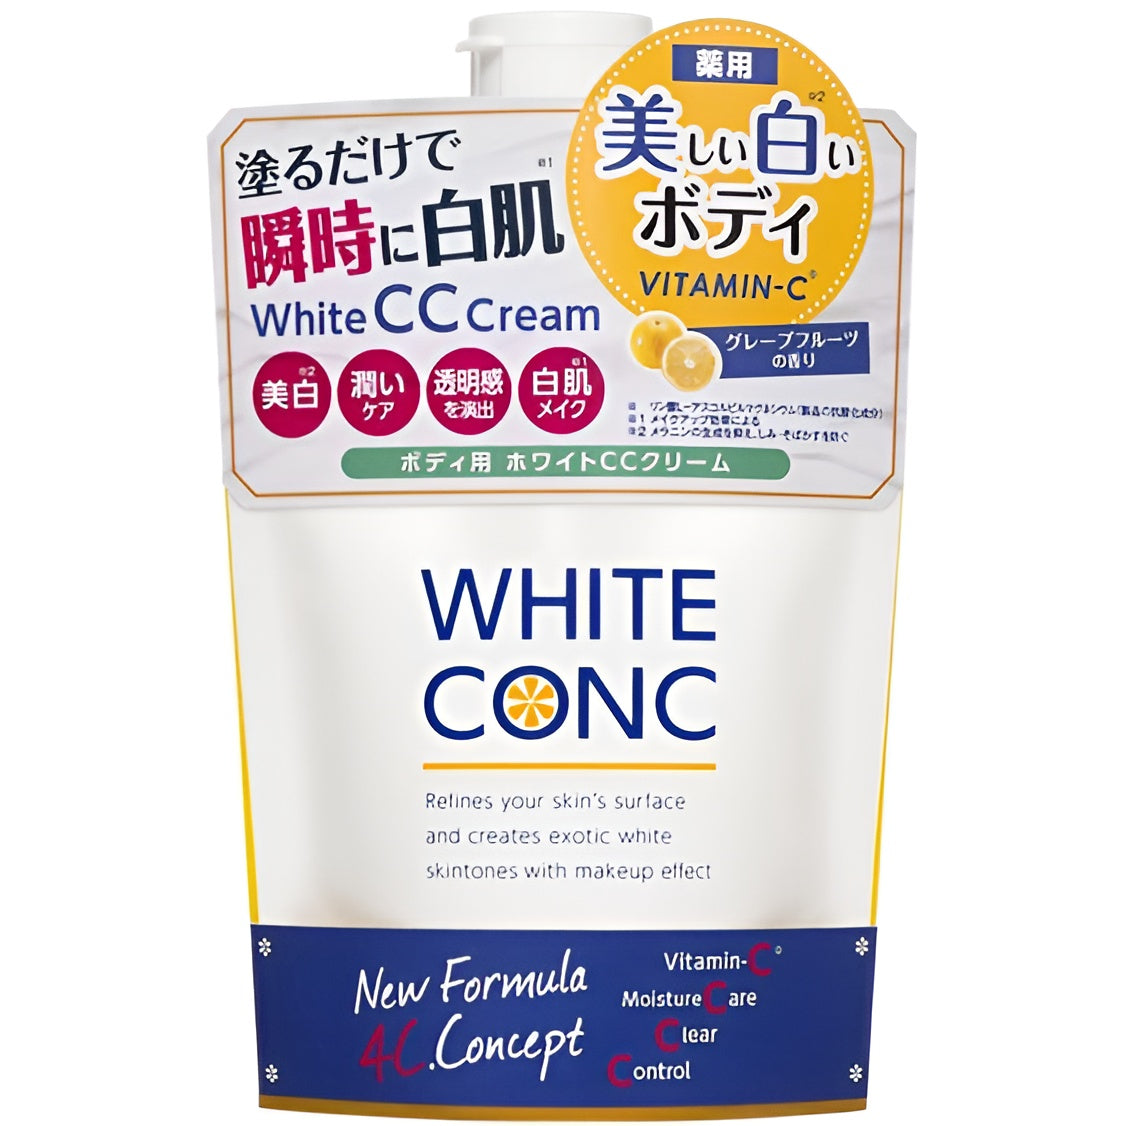 Whitening CC Cream